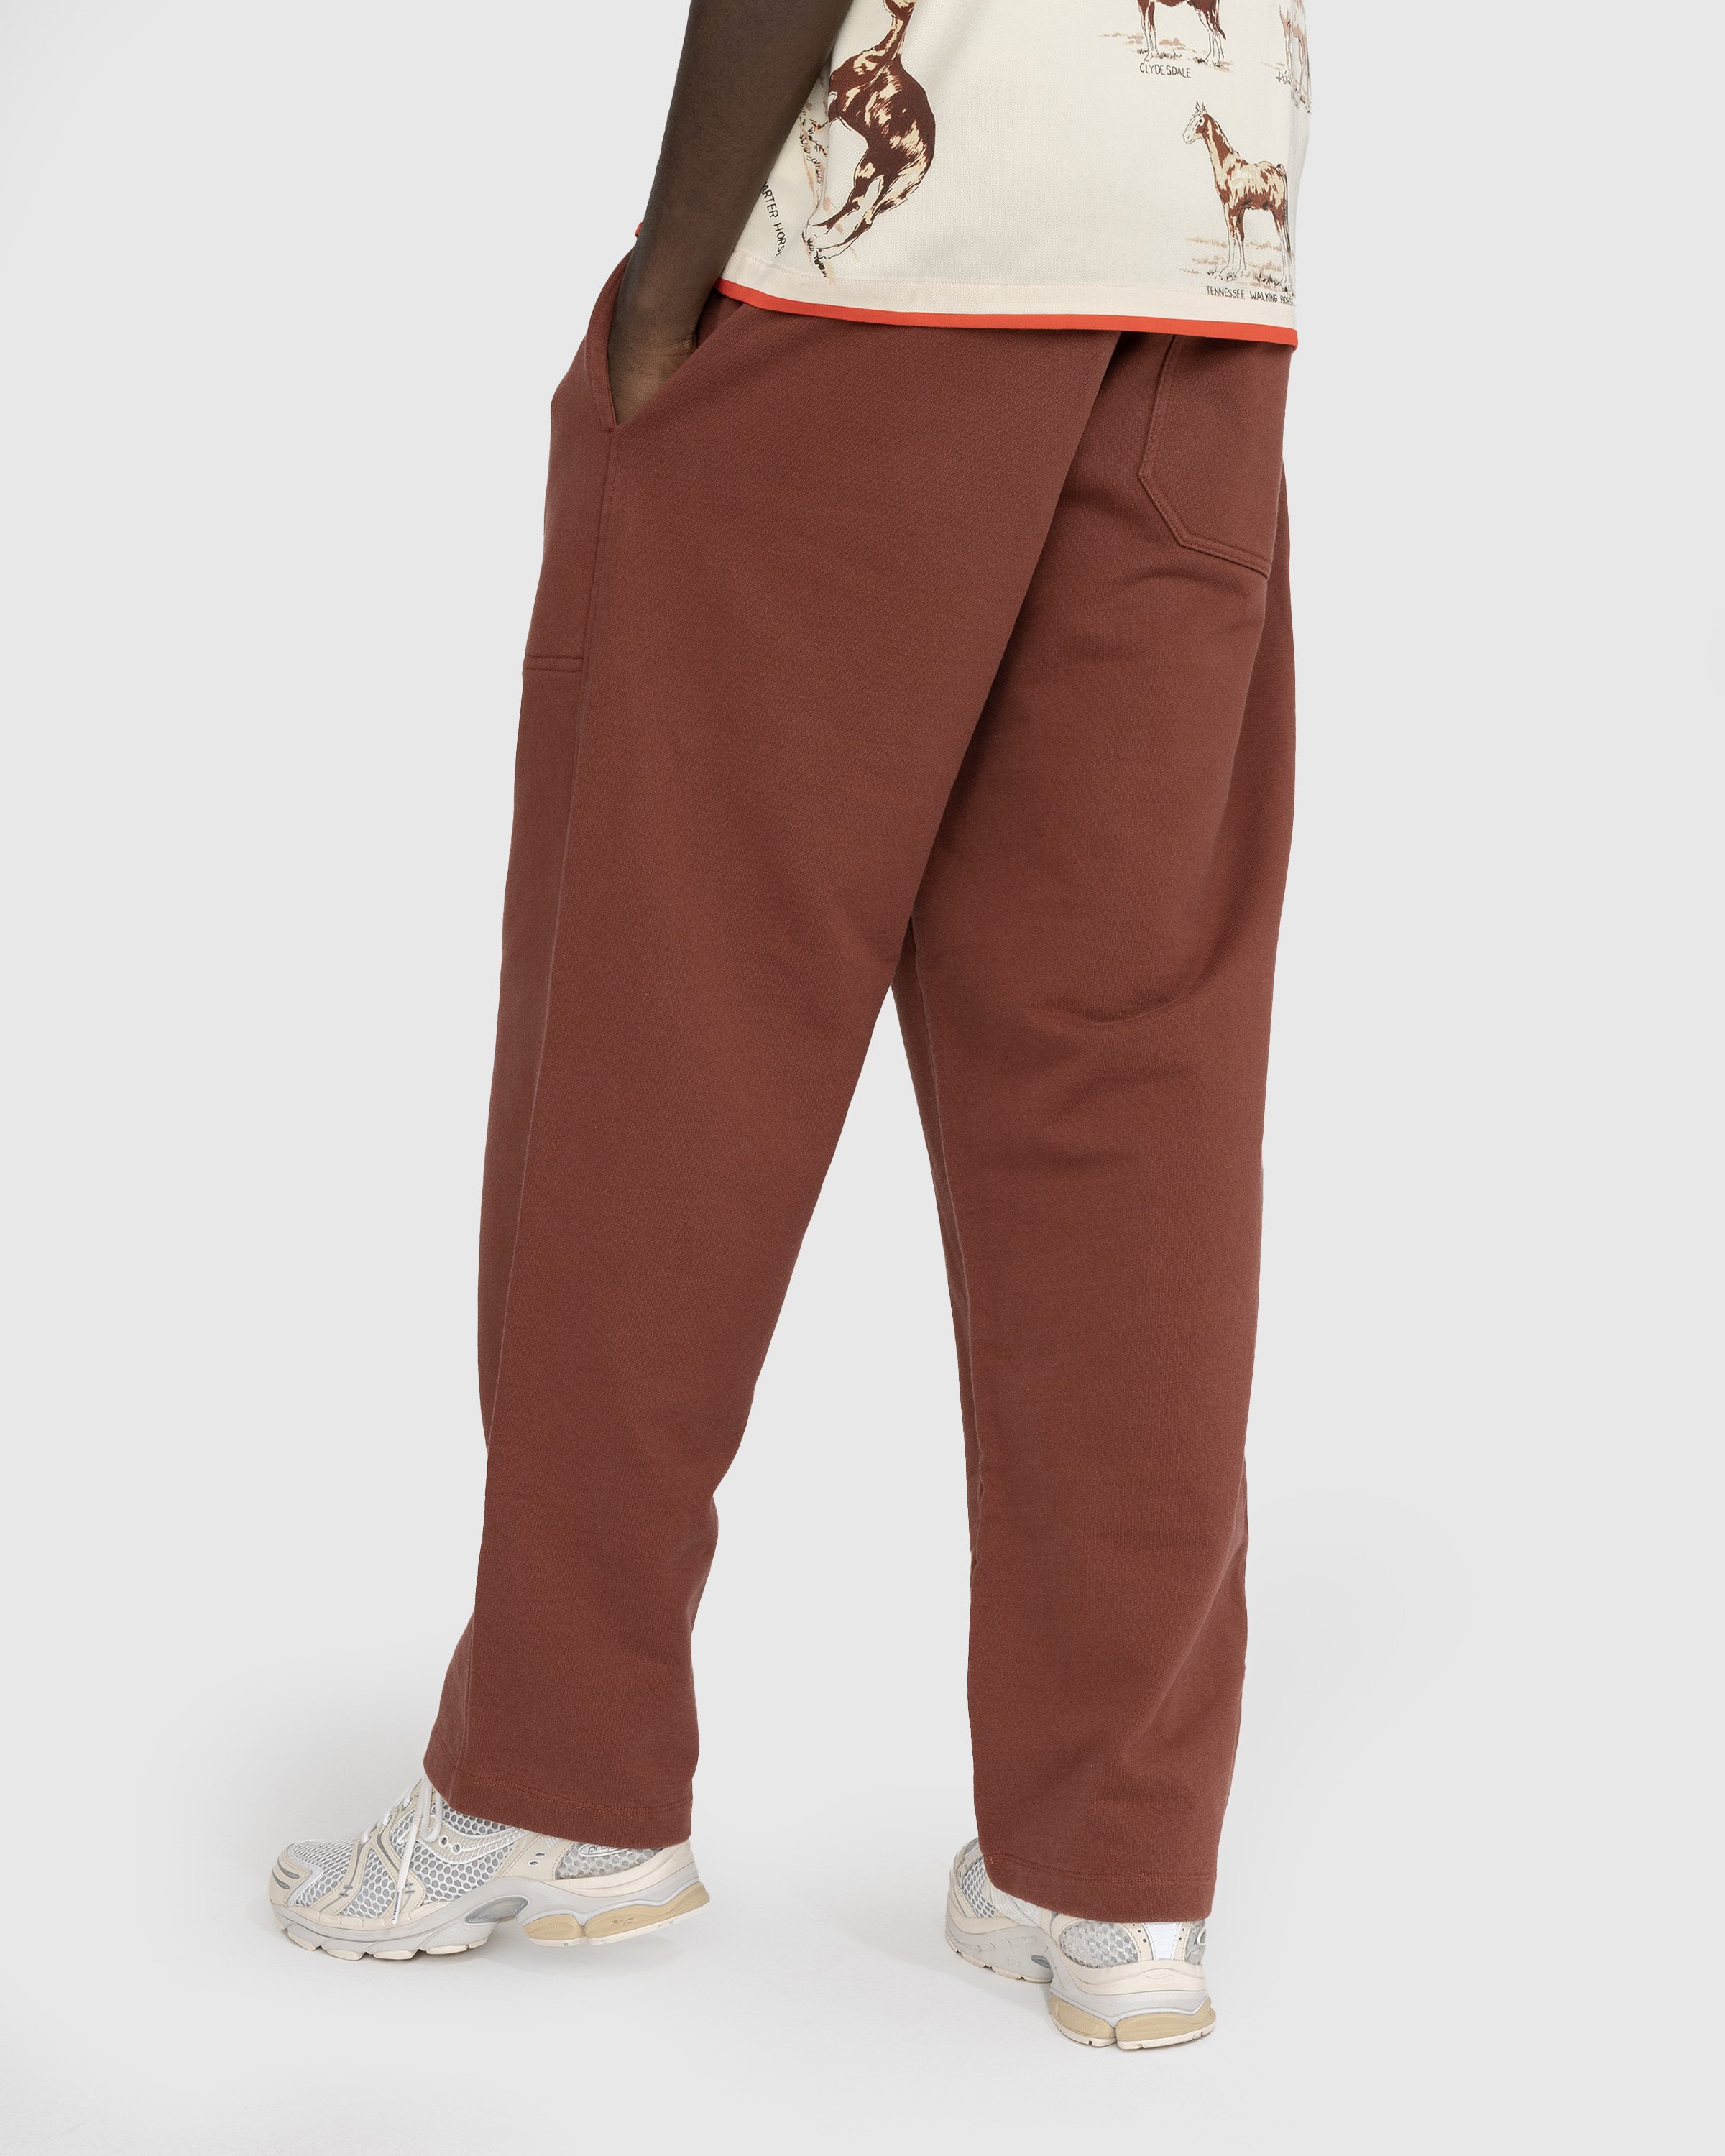 Bode - Sweatpant - Clothing - Brown - Image 3